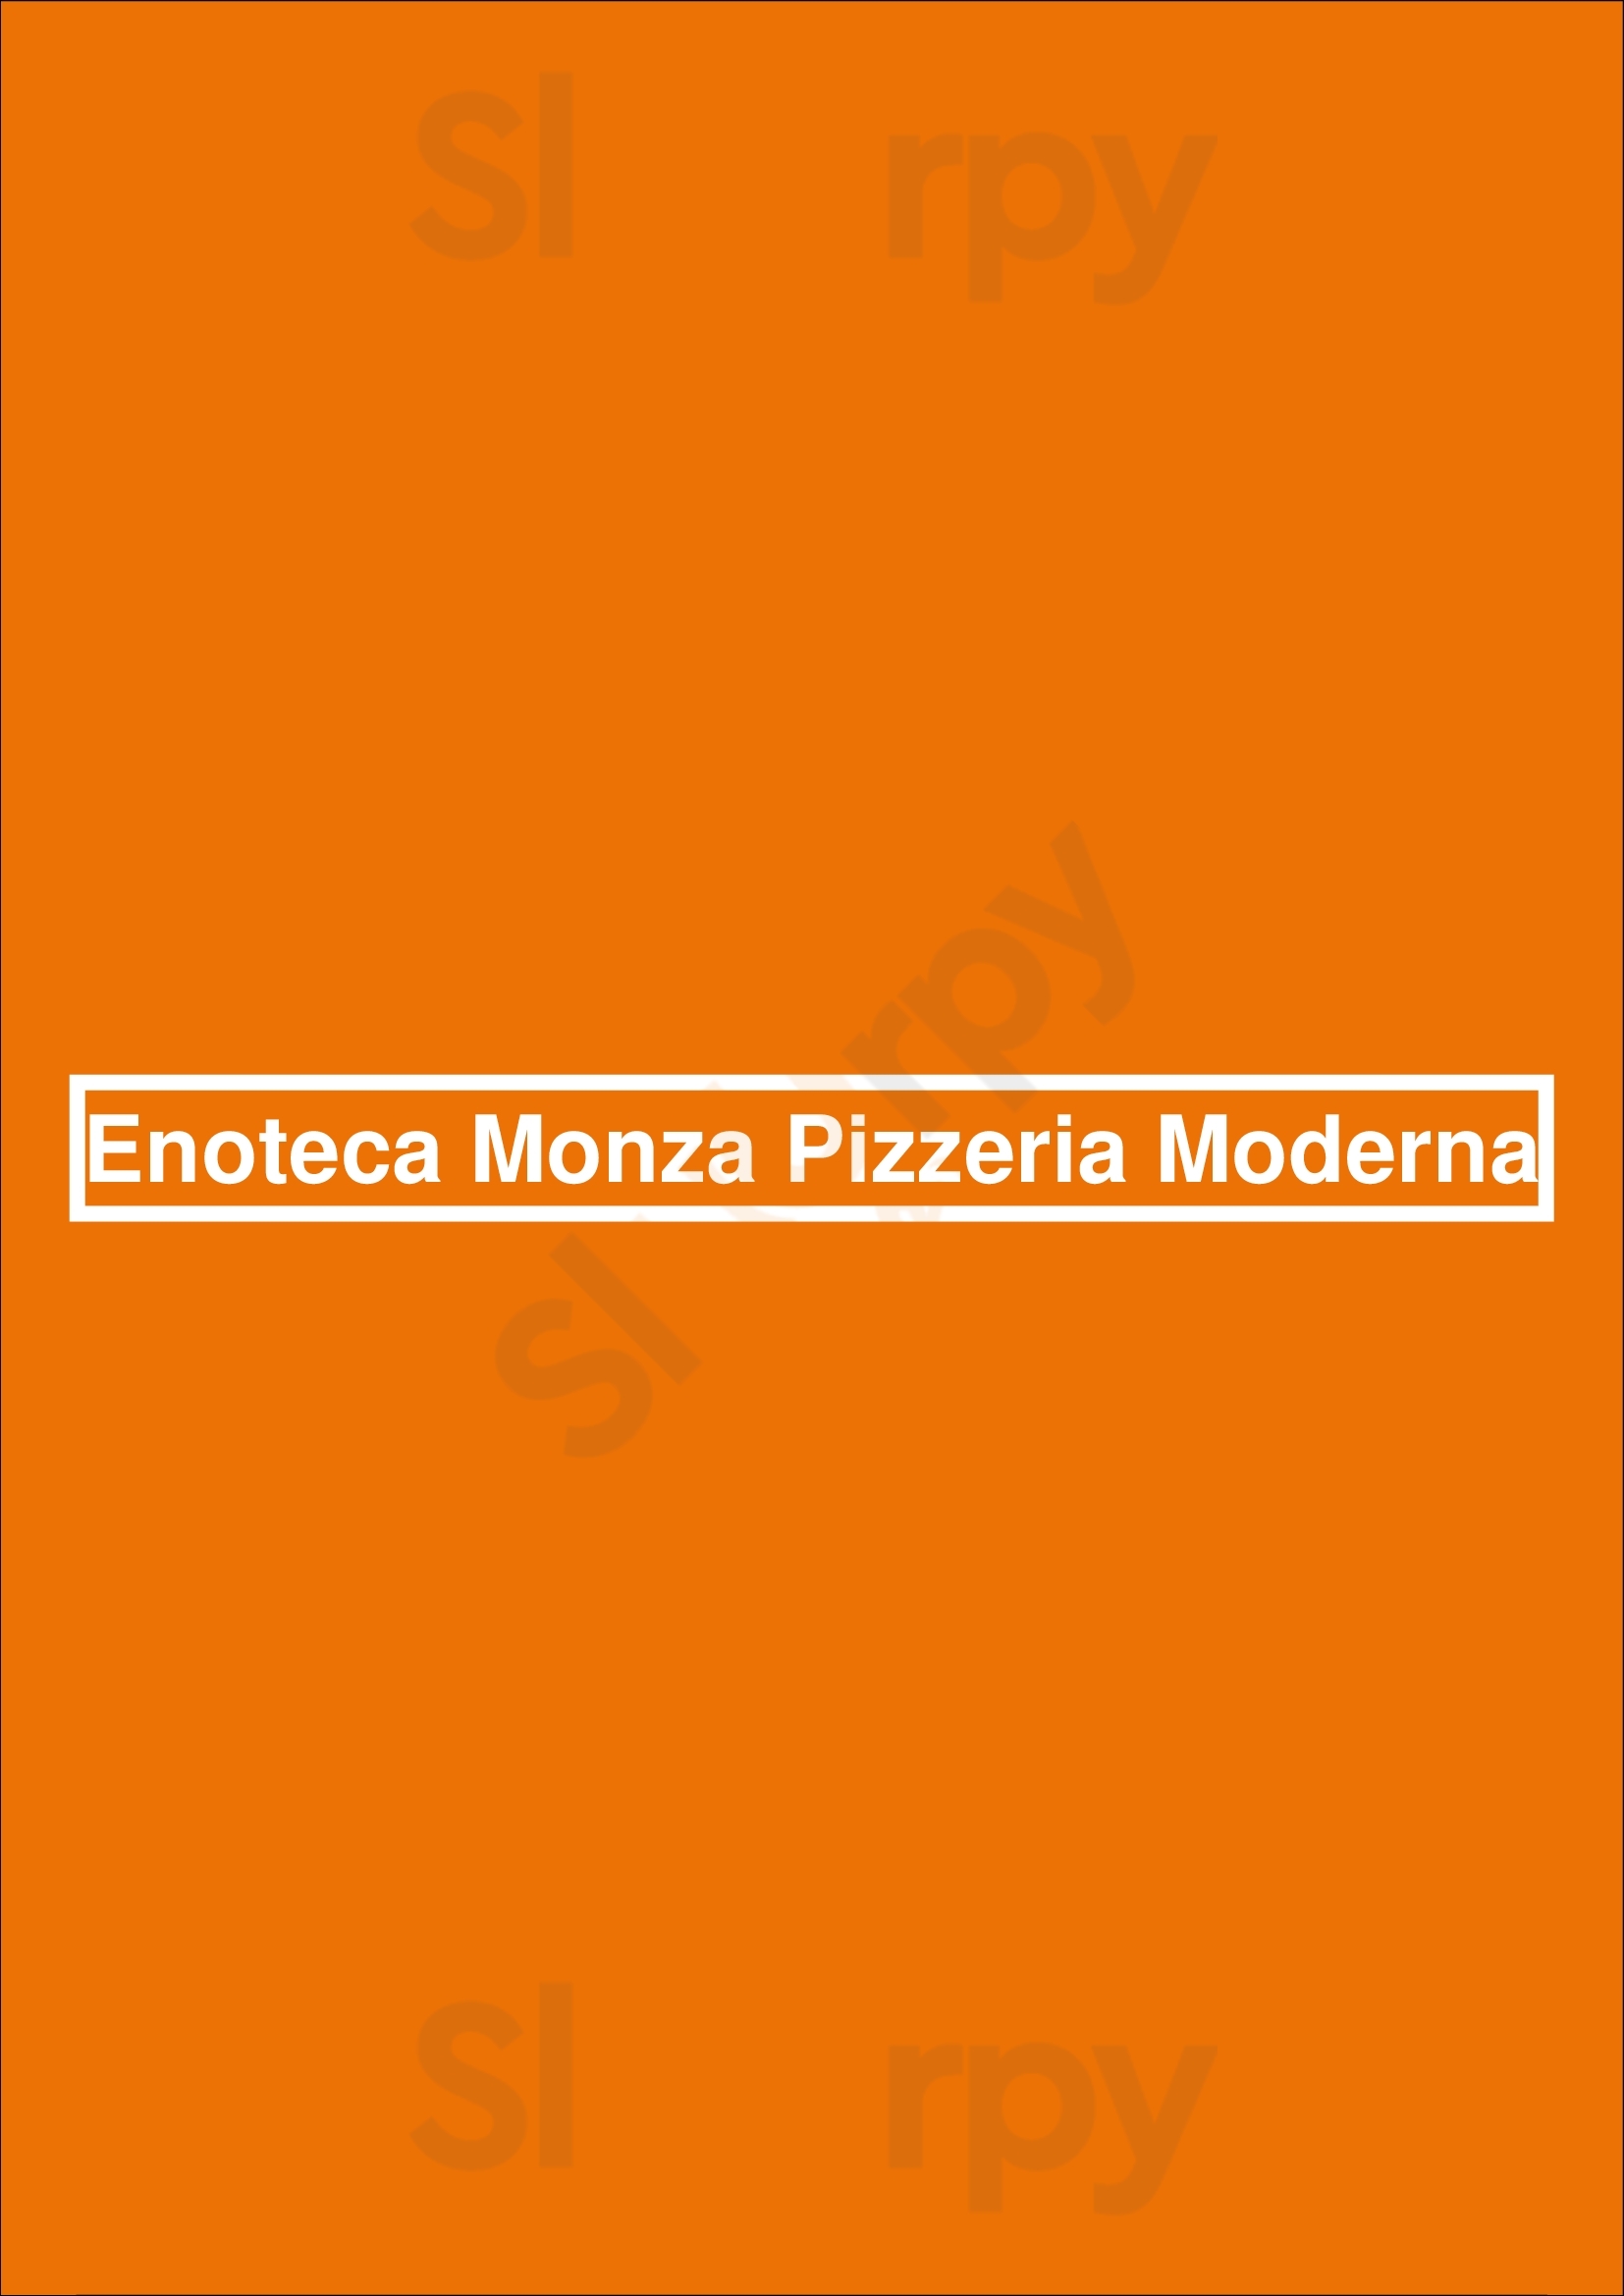 Enoteca Monza Pizzeria Moderna Dollard-des-Ormeaux Menu - 1